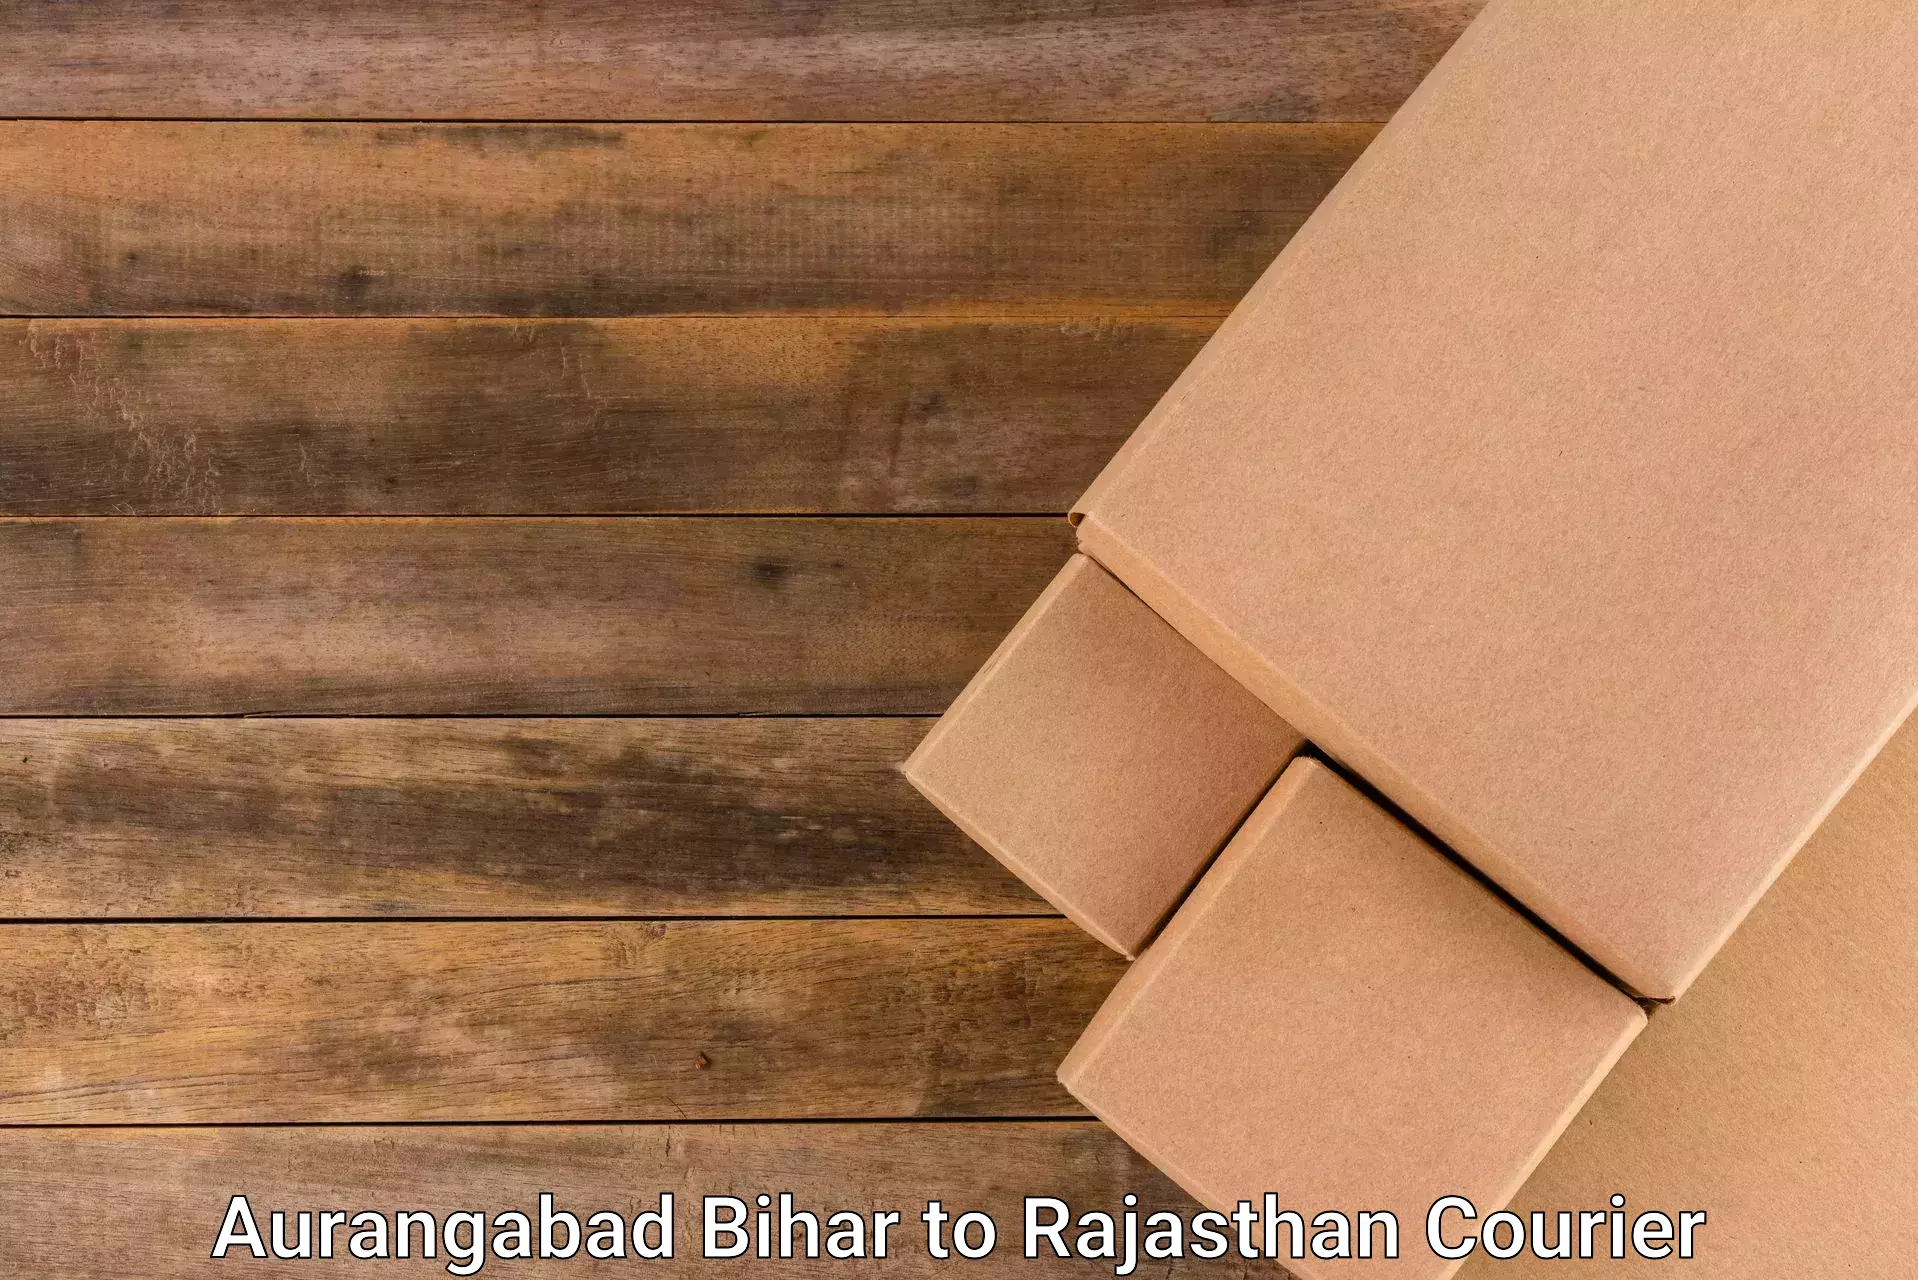 Advanced package delivery Aurangabad Bihar to Jaisalmer